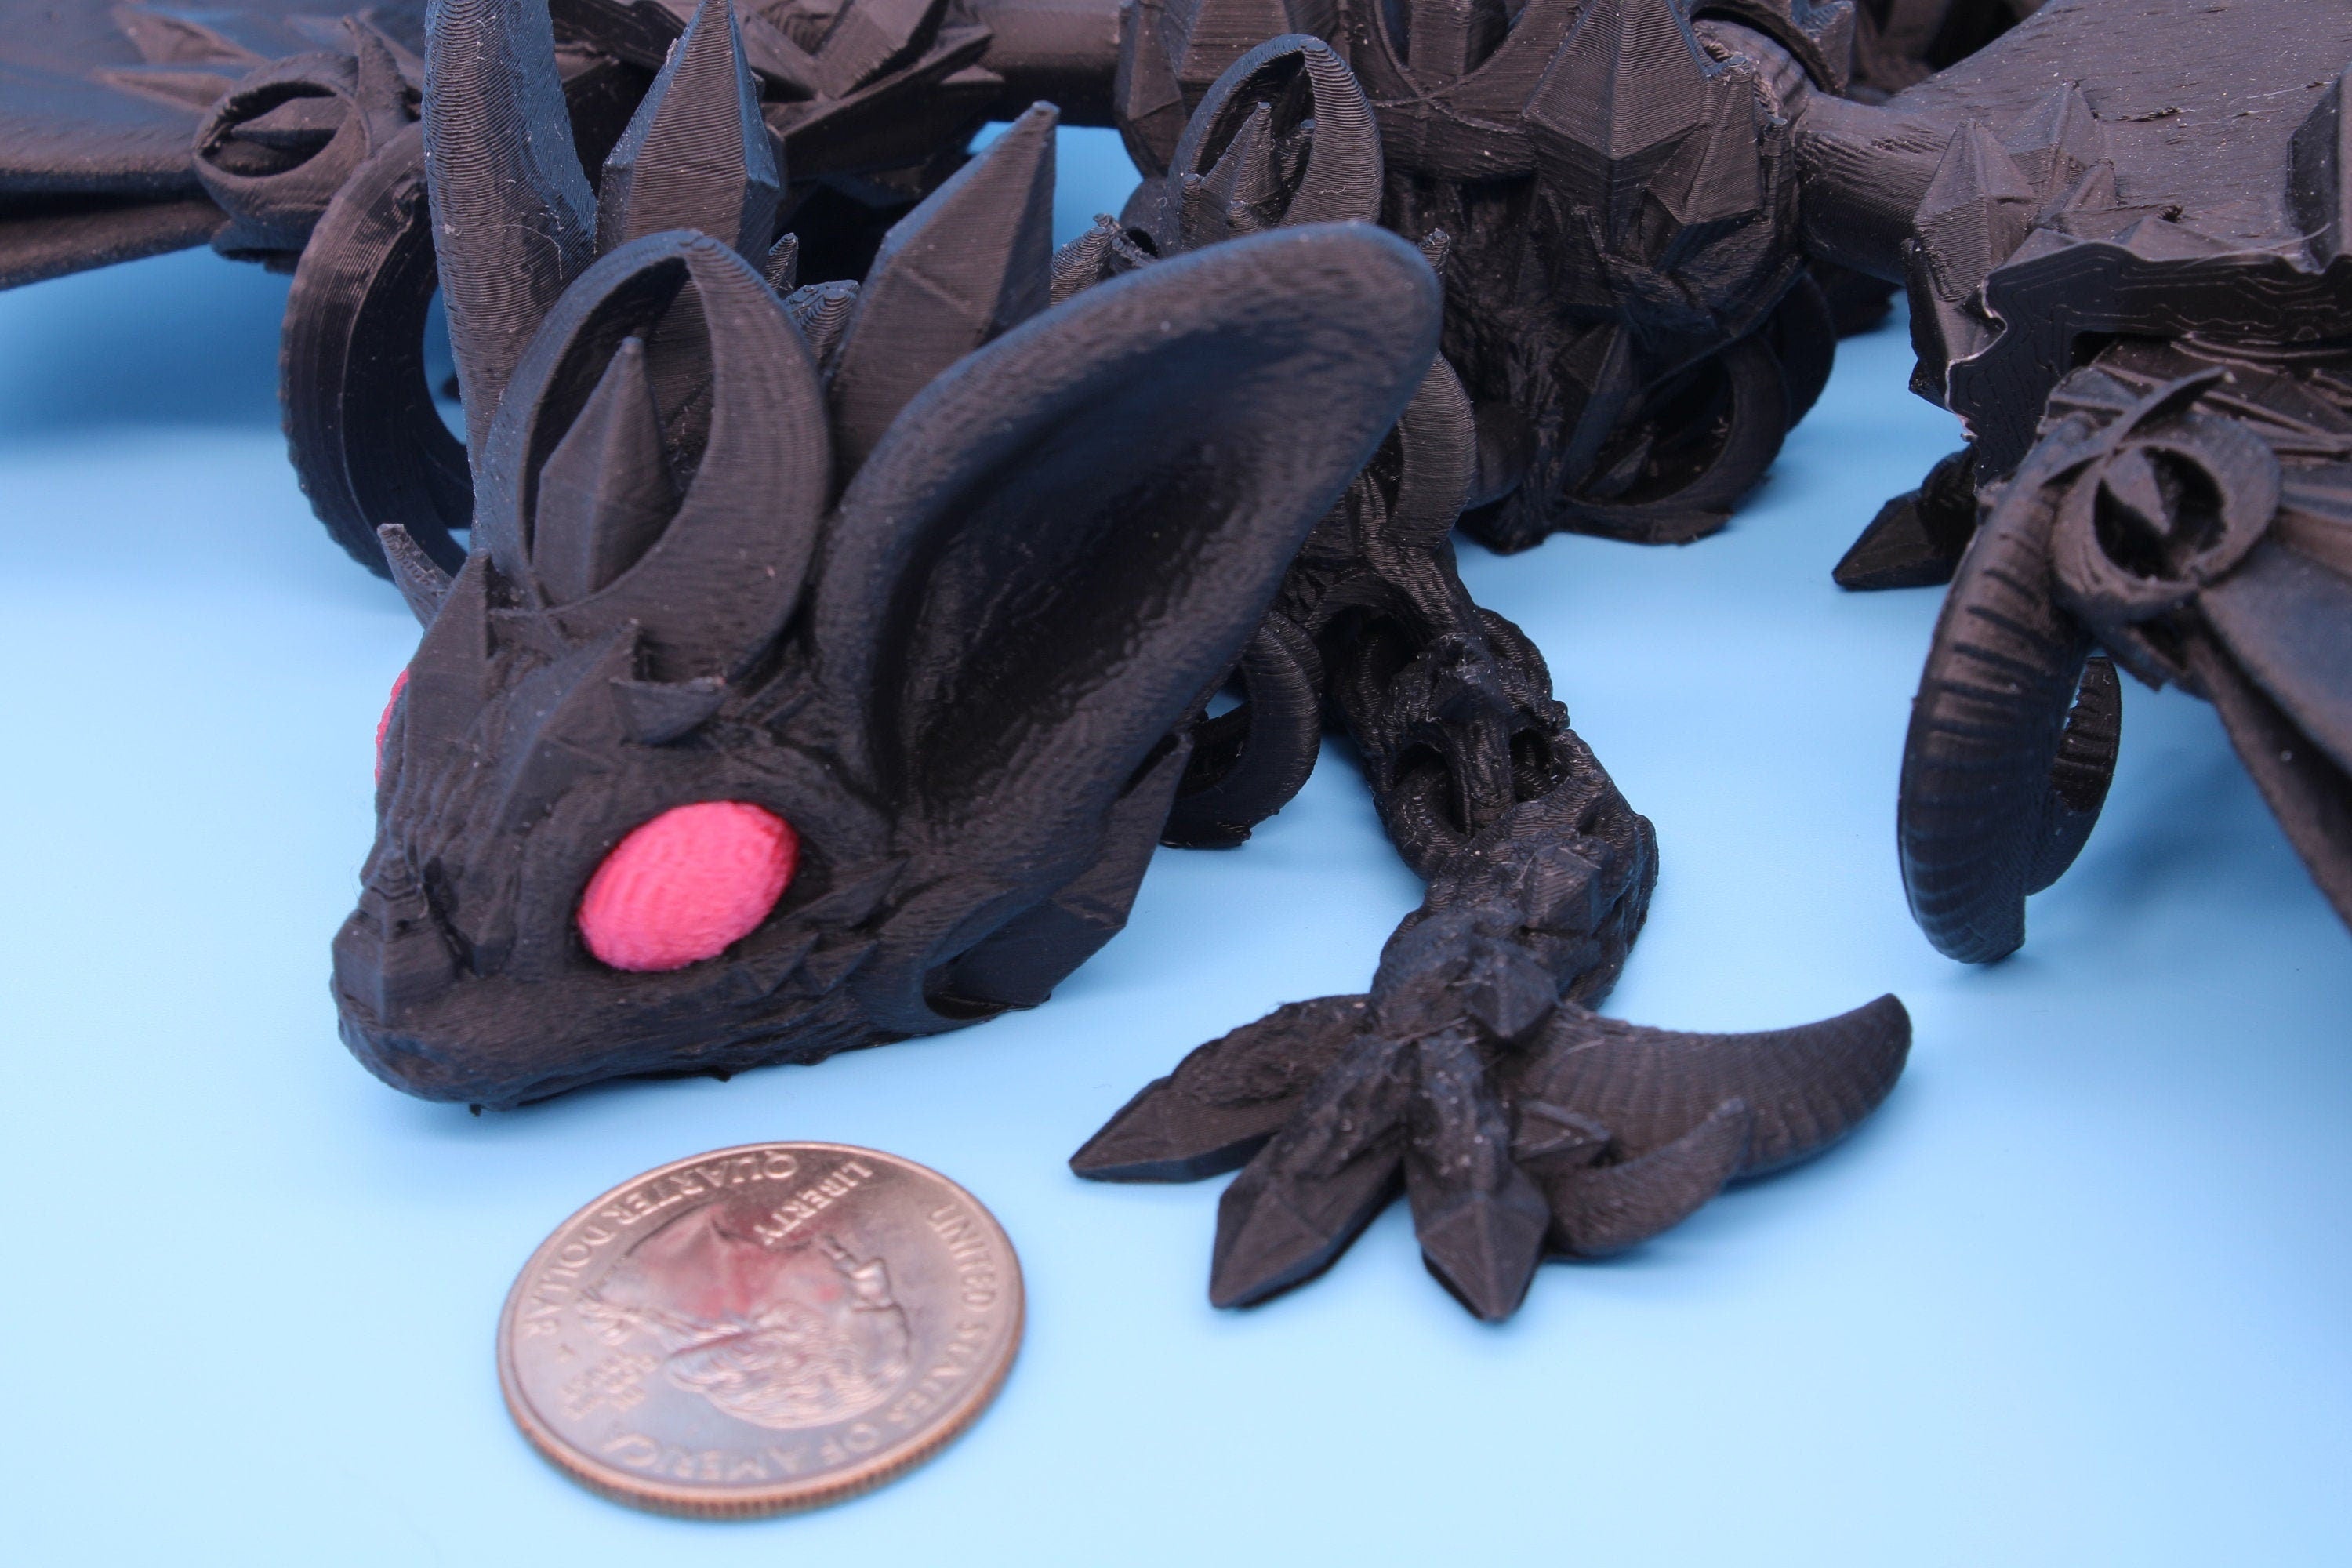 Bat Dragon | Night Wing | Articulating Dragon | 3D Printed Fidget | Flexi Toy | Adult Fidget Toy | Sensory Desk Toy | 12.5 in.